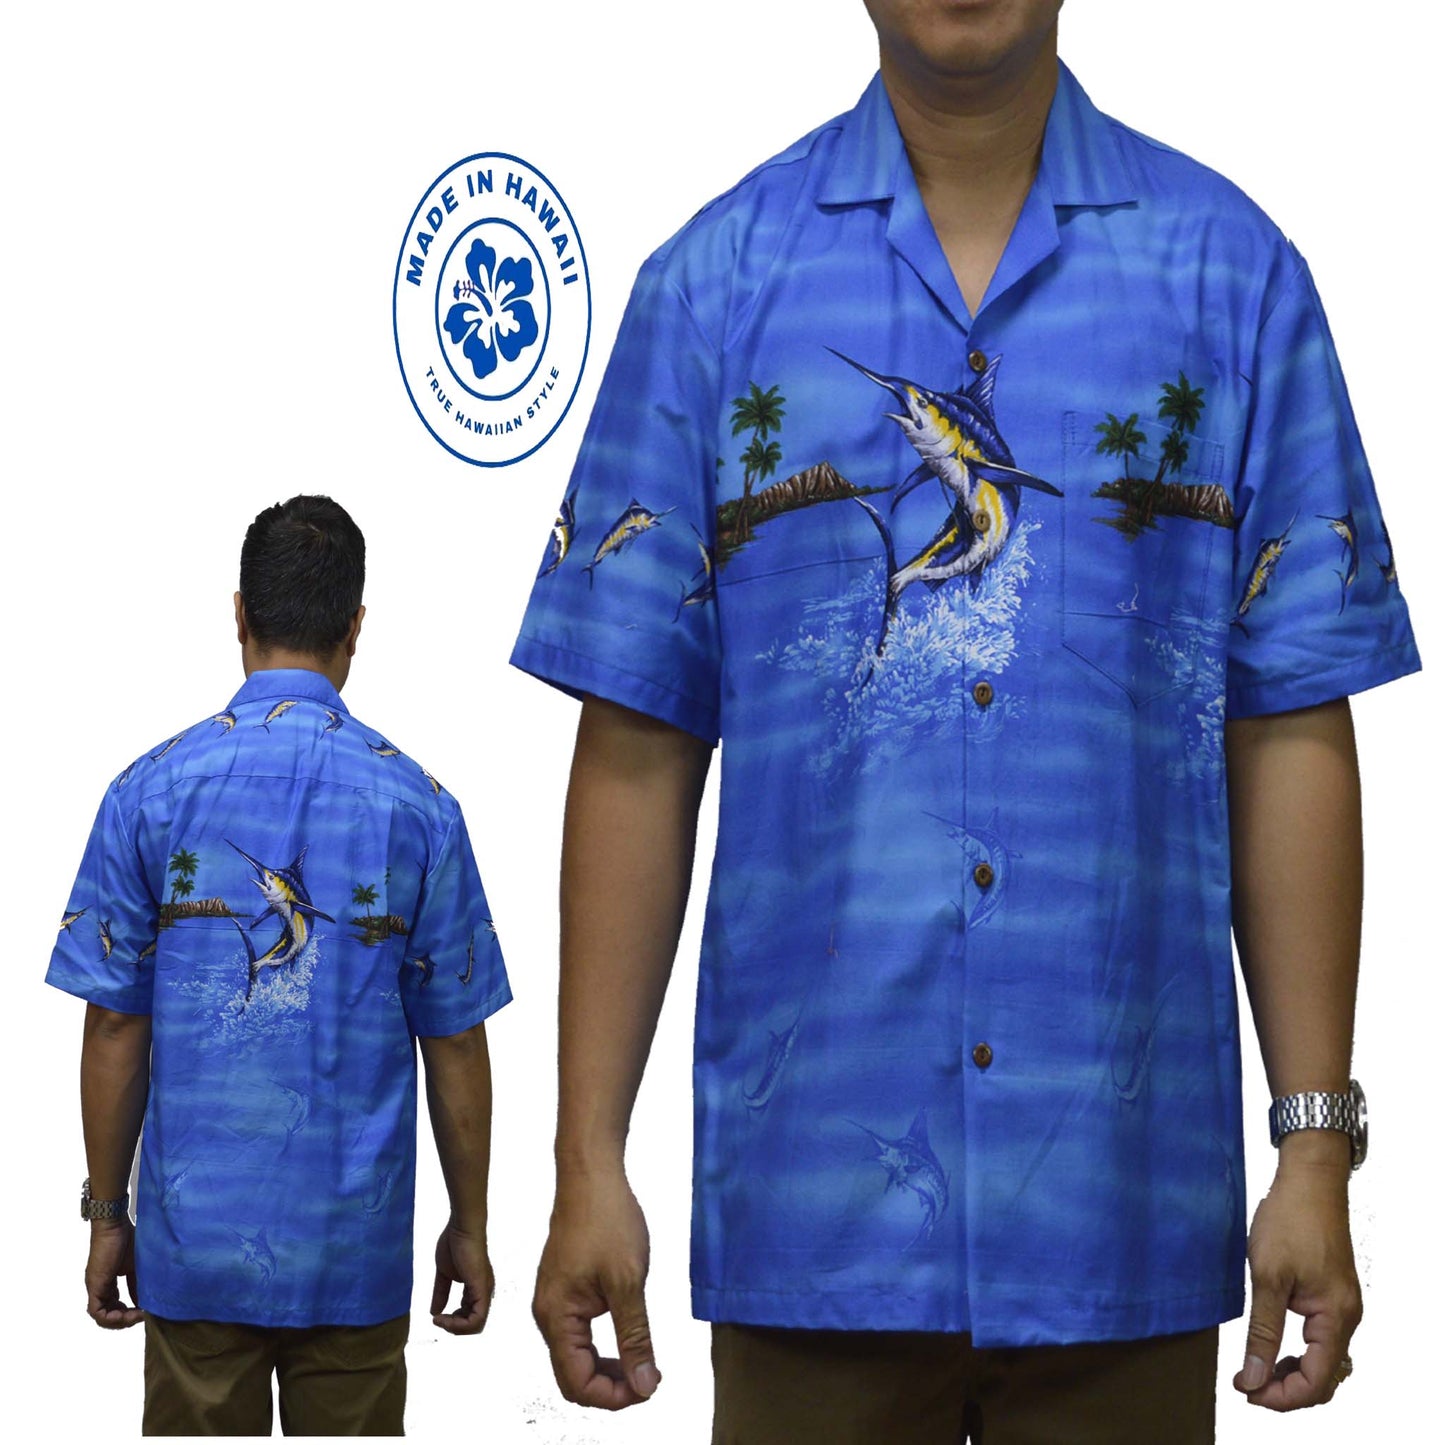 Ky's Hawaiian Cotton Shirt Marlin Breeze - Navy